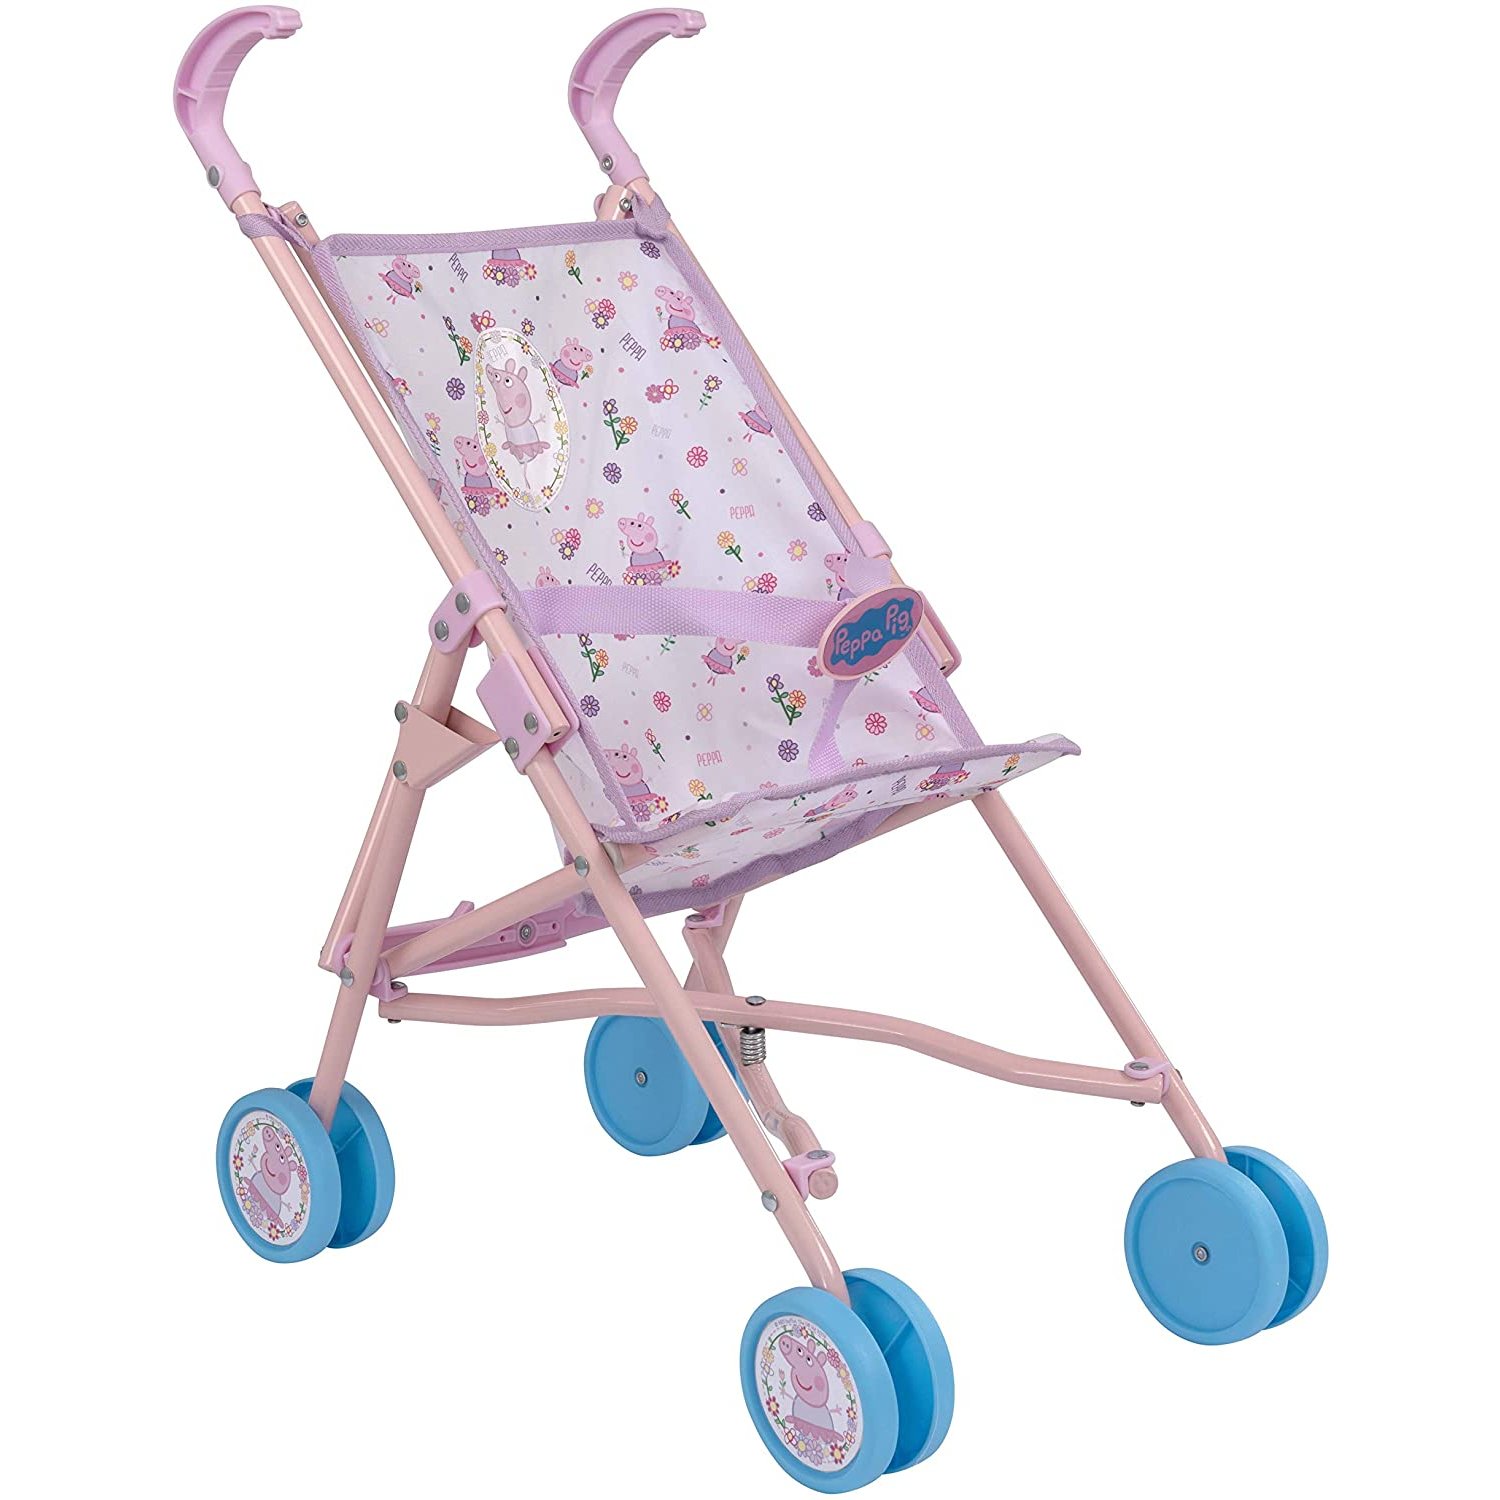 HTI Peppa Pig Stroller | Childrens Baby Doll Pram Toy Great For Girls & Boys Aged 3+